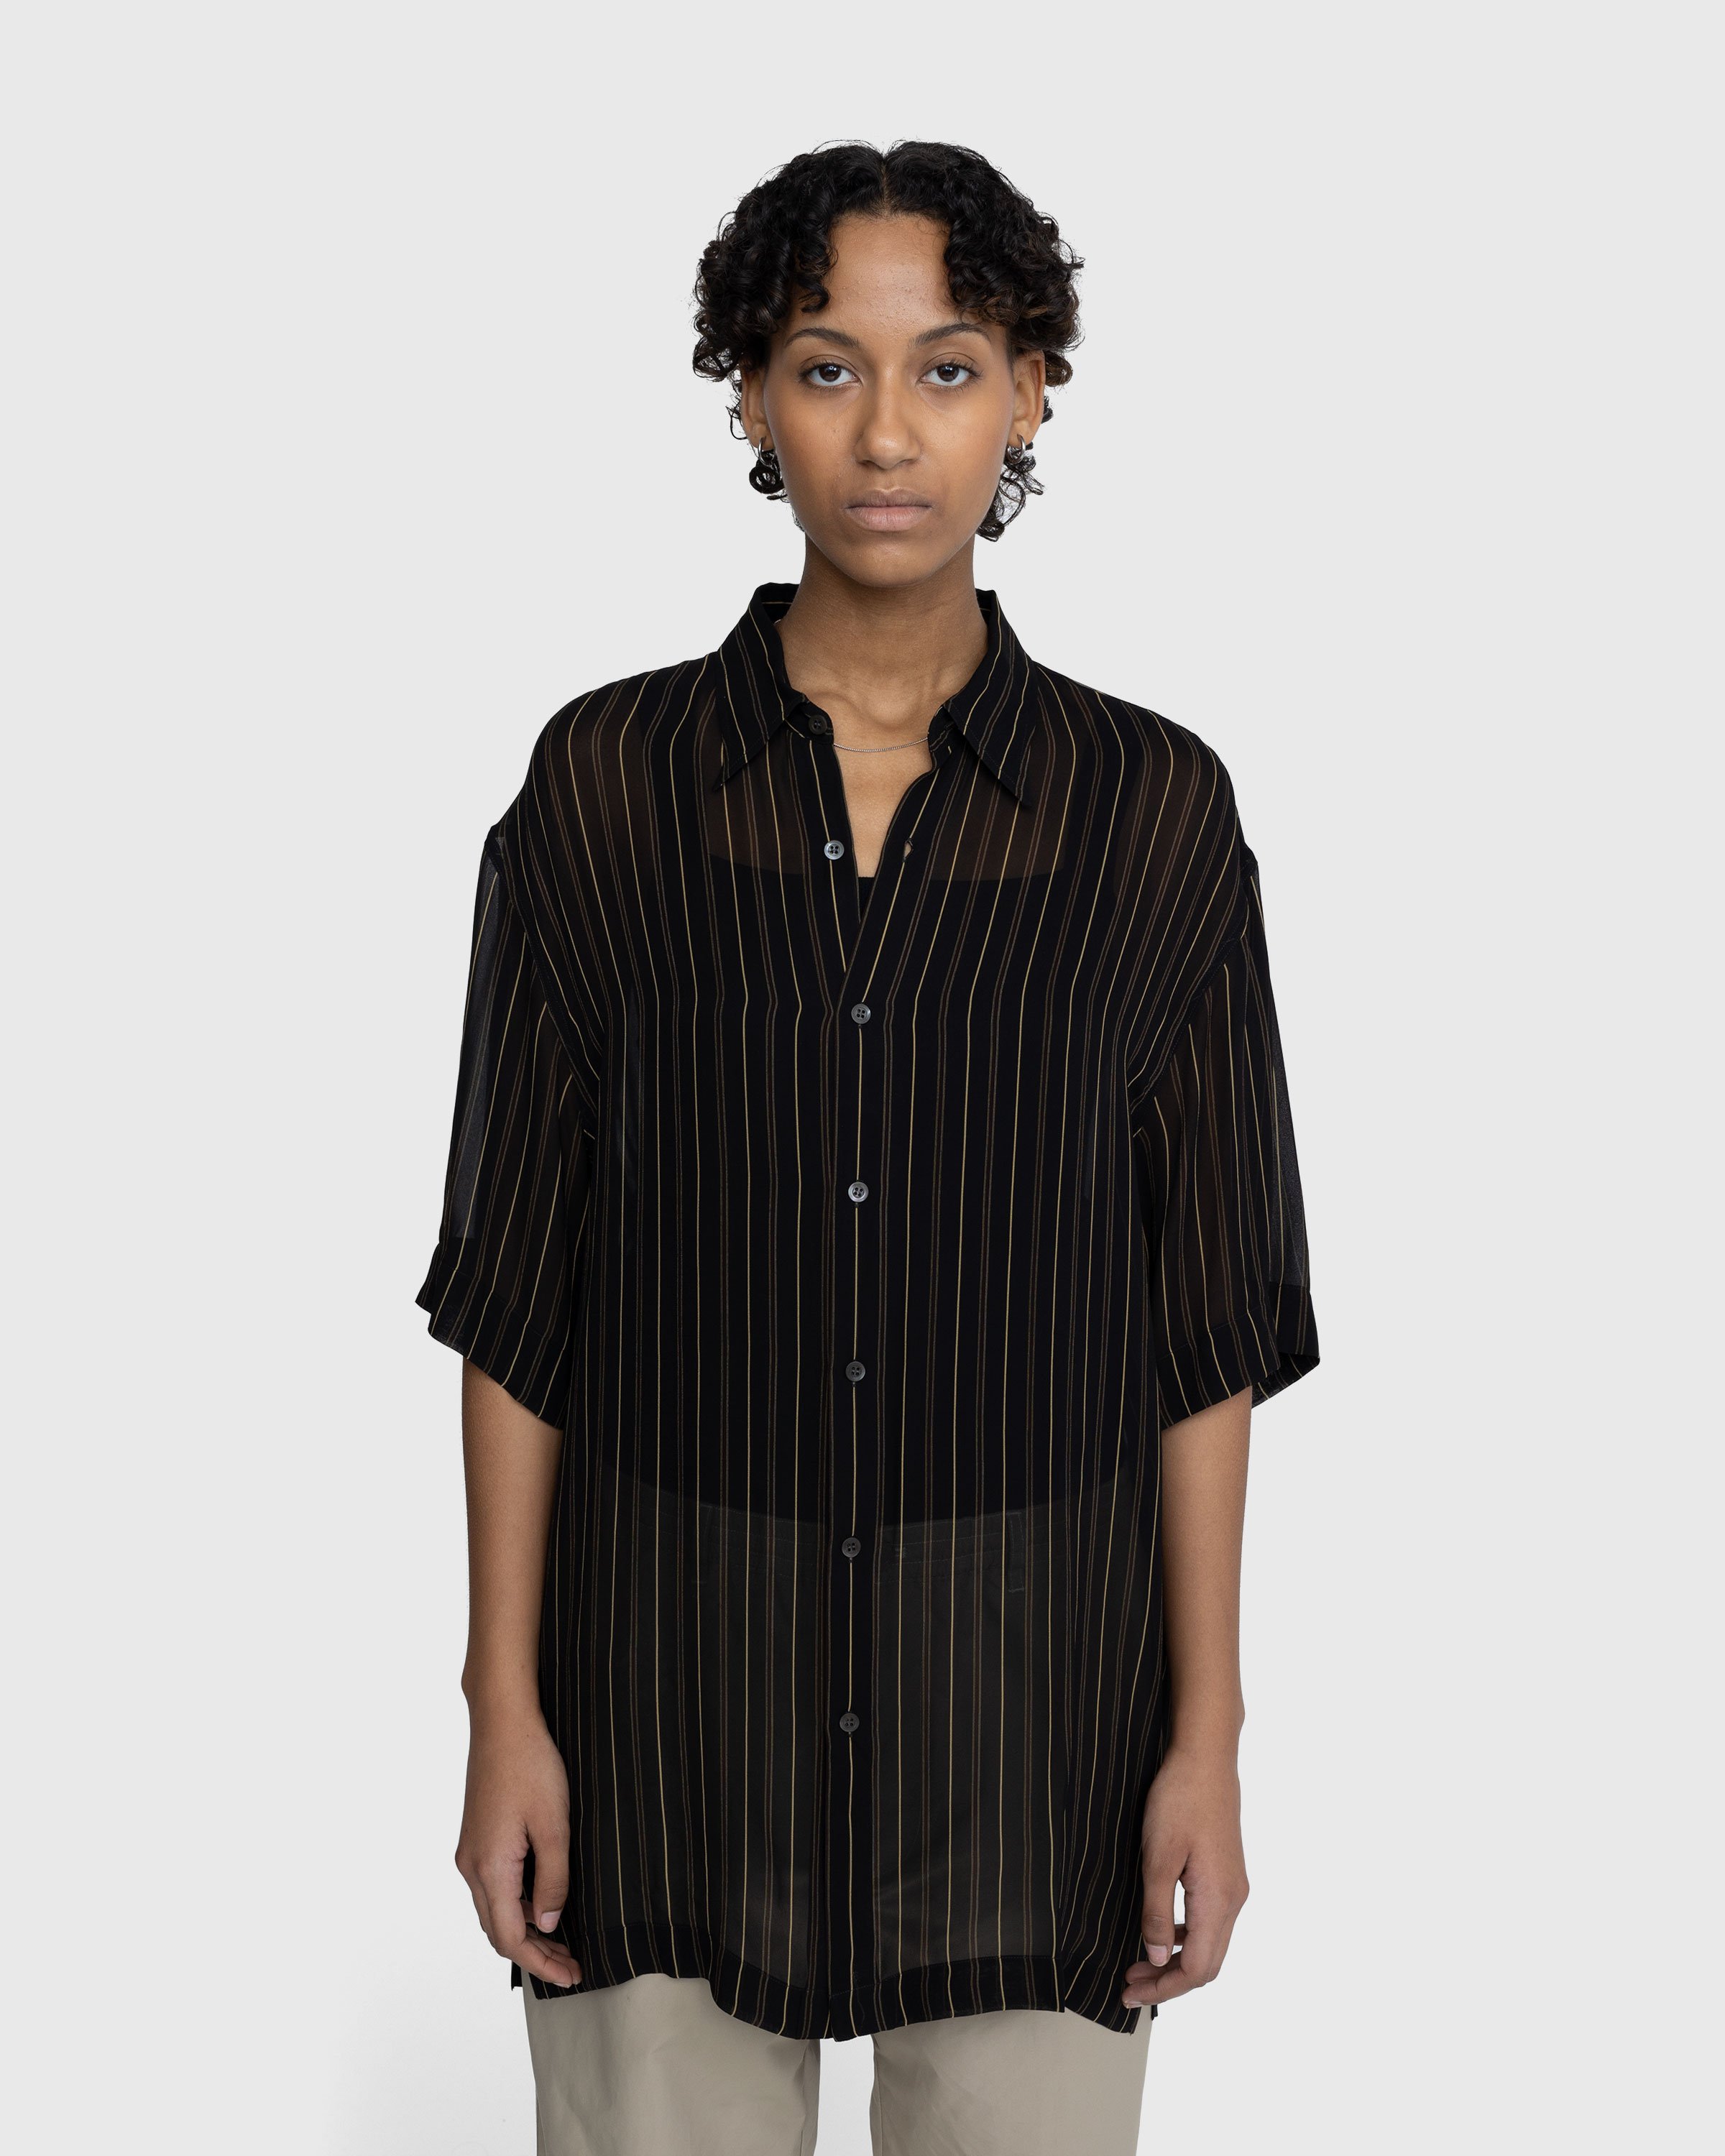 Dries van Noten - Cassidye Shirt Black - Clothing - Black - Image 2